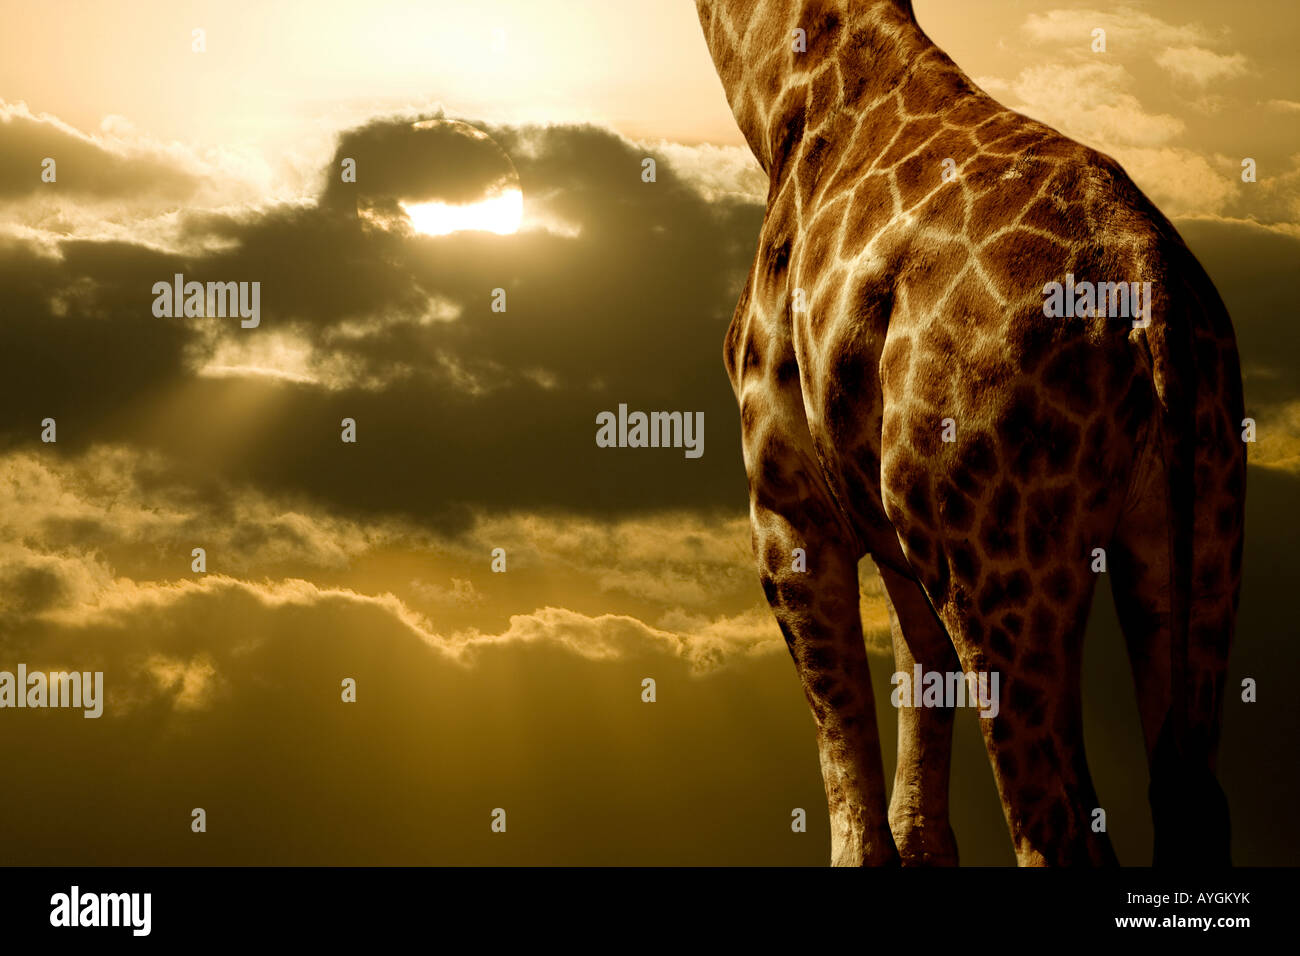 Girafe Rothschild et le coucher du soleil, au Kenya Banque D'Images